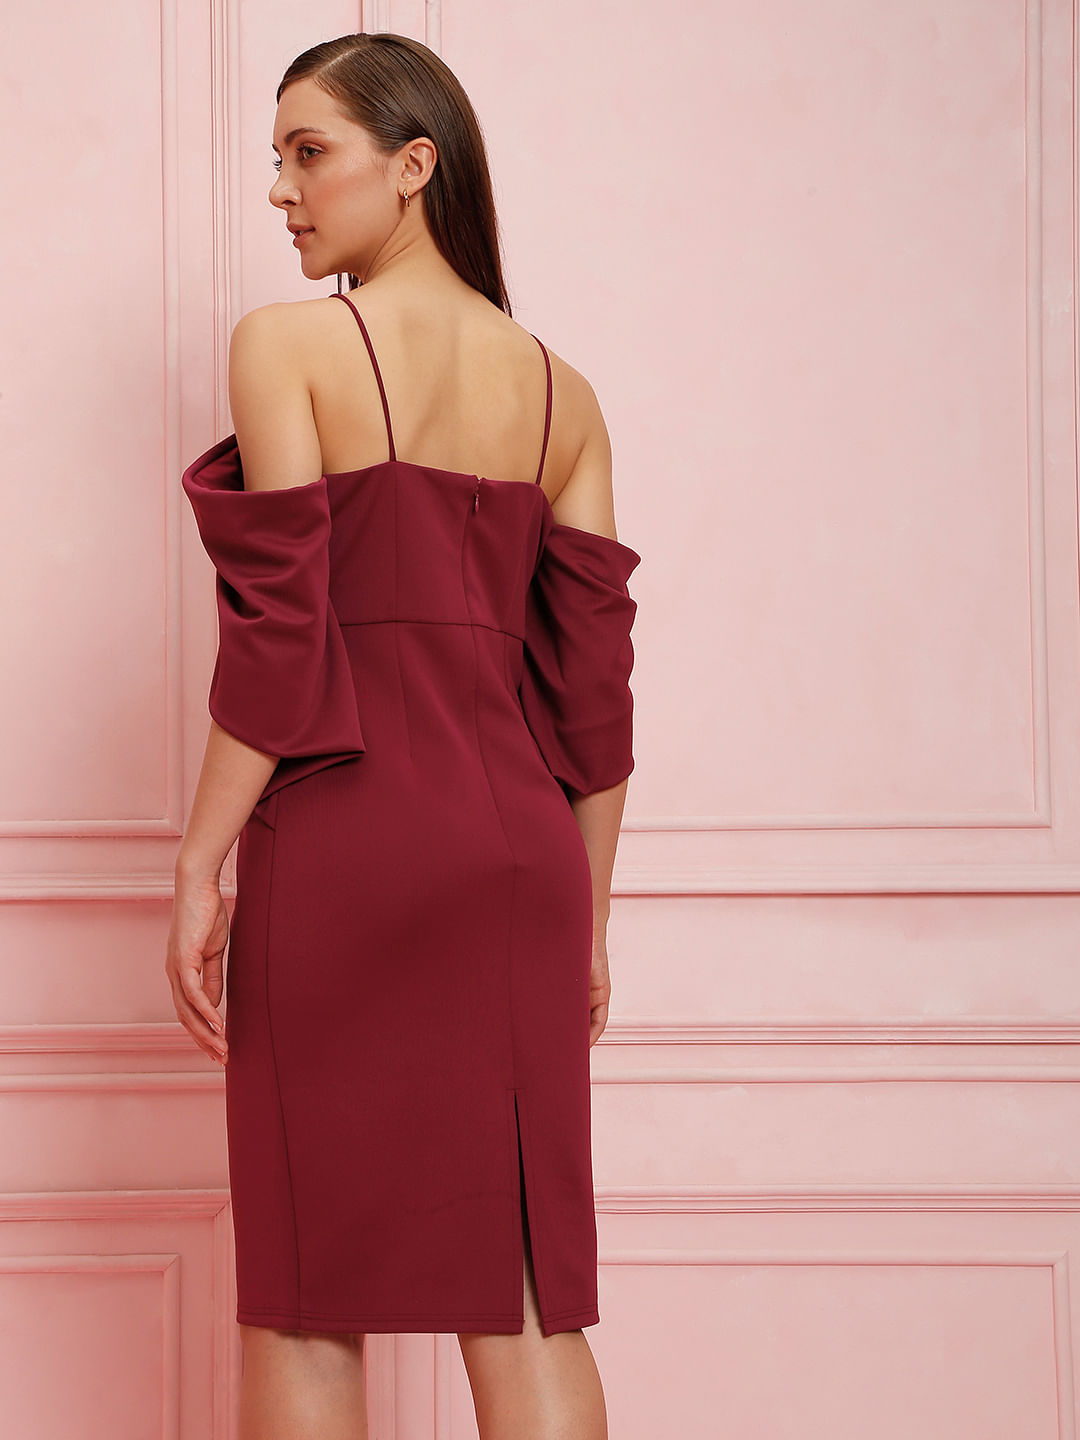 Short Off Shoulder Red Lace Bridal Party Dress - $119.9808 #MYX18171 -  SheProm.com